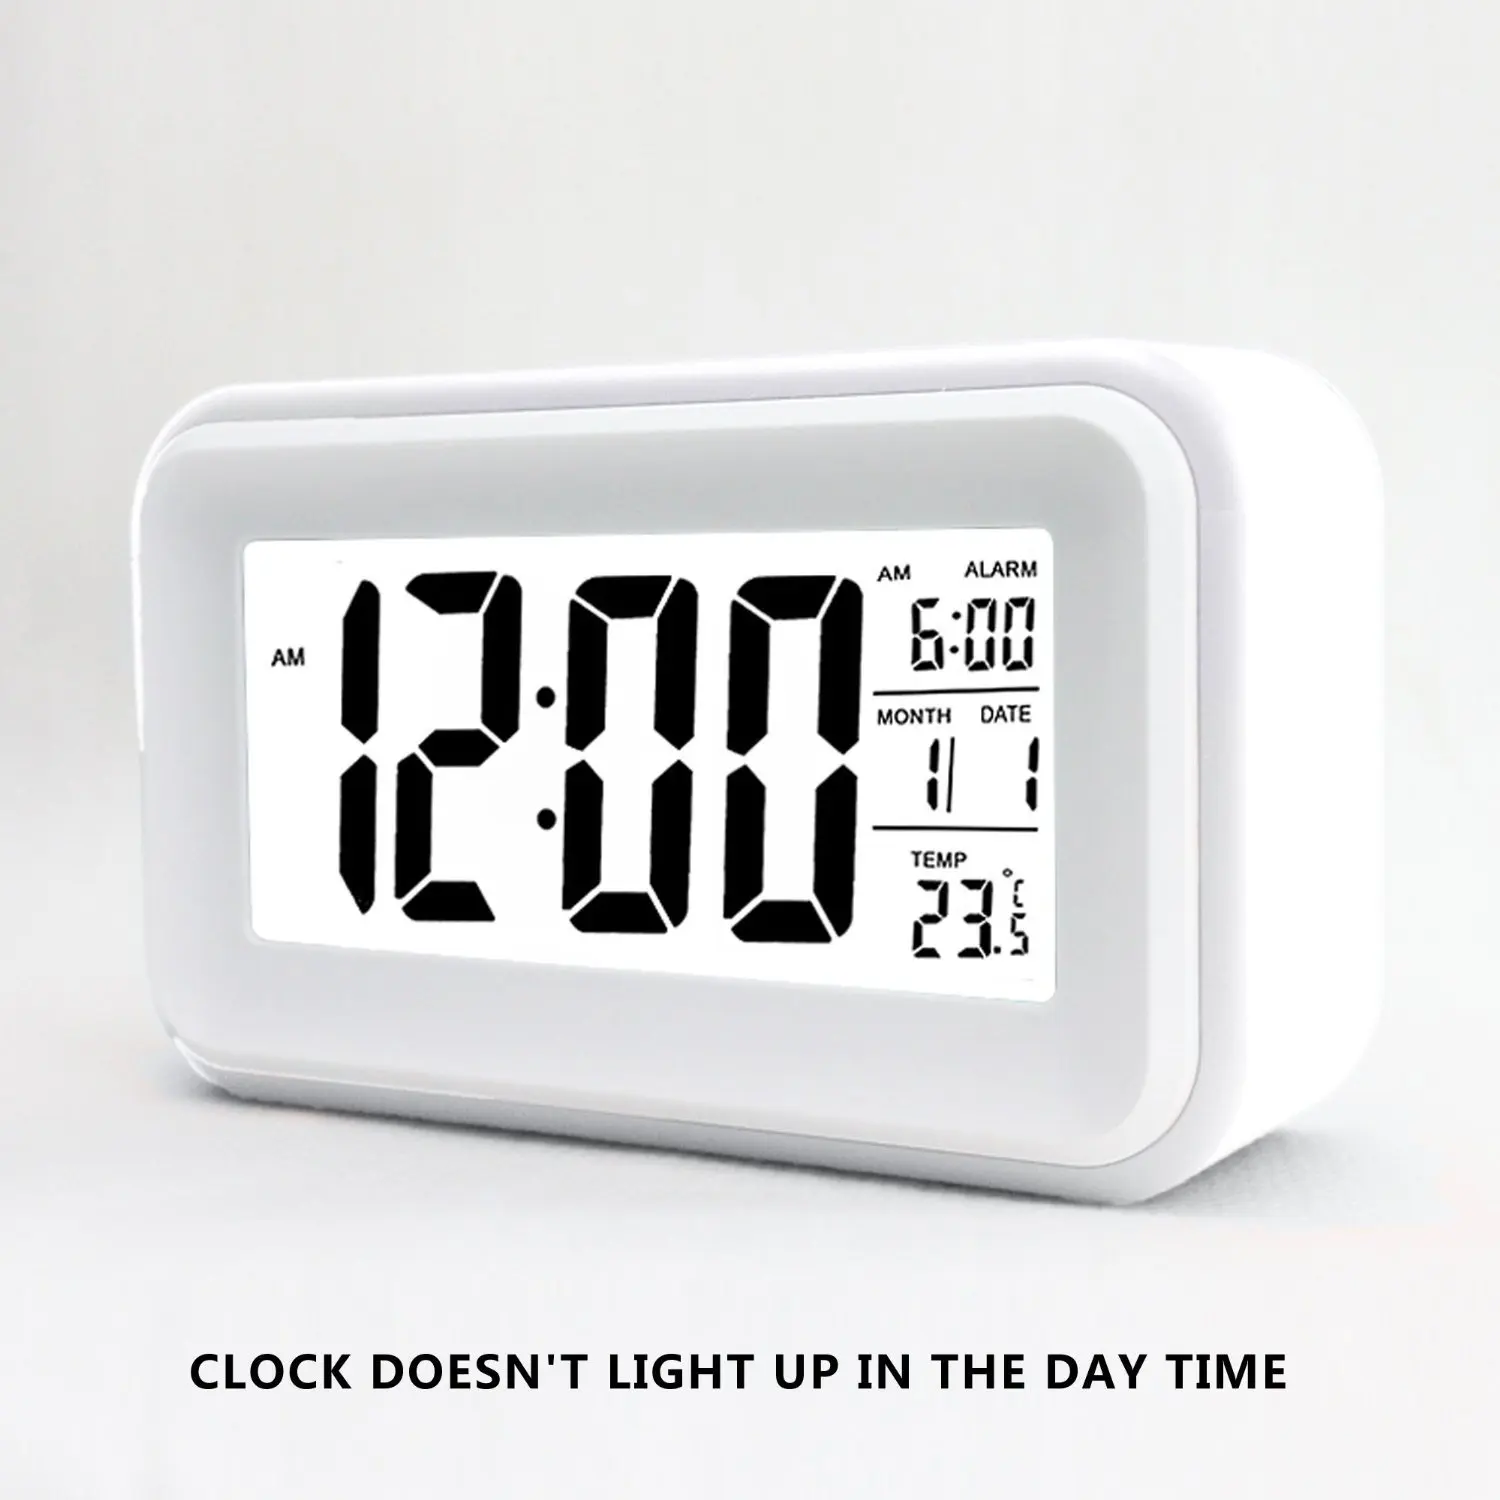 Jcc smart light flat screen alarm clock user manual pdf download